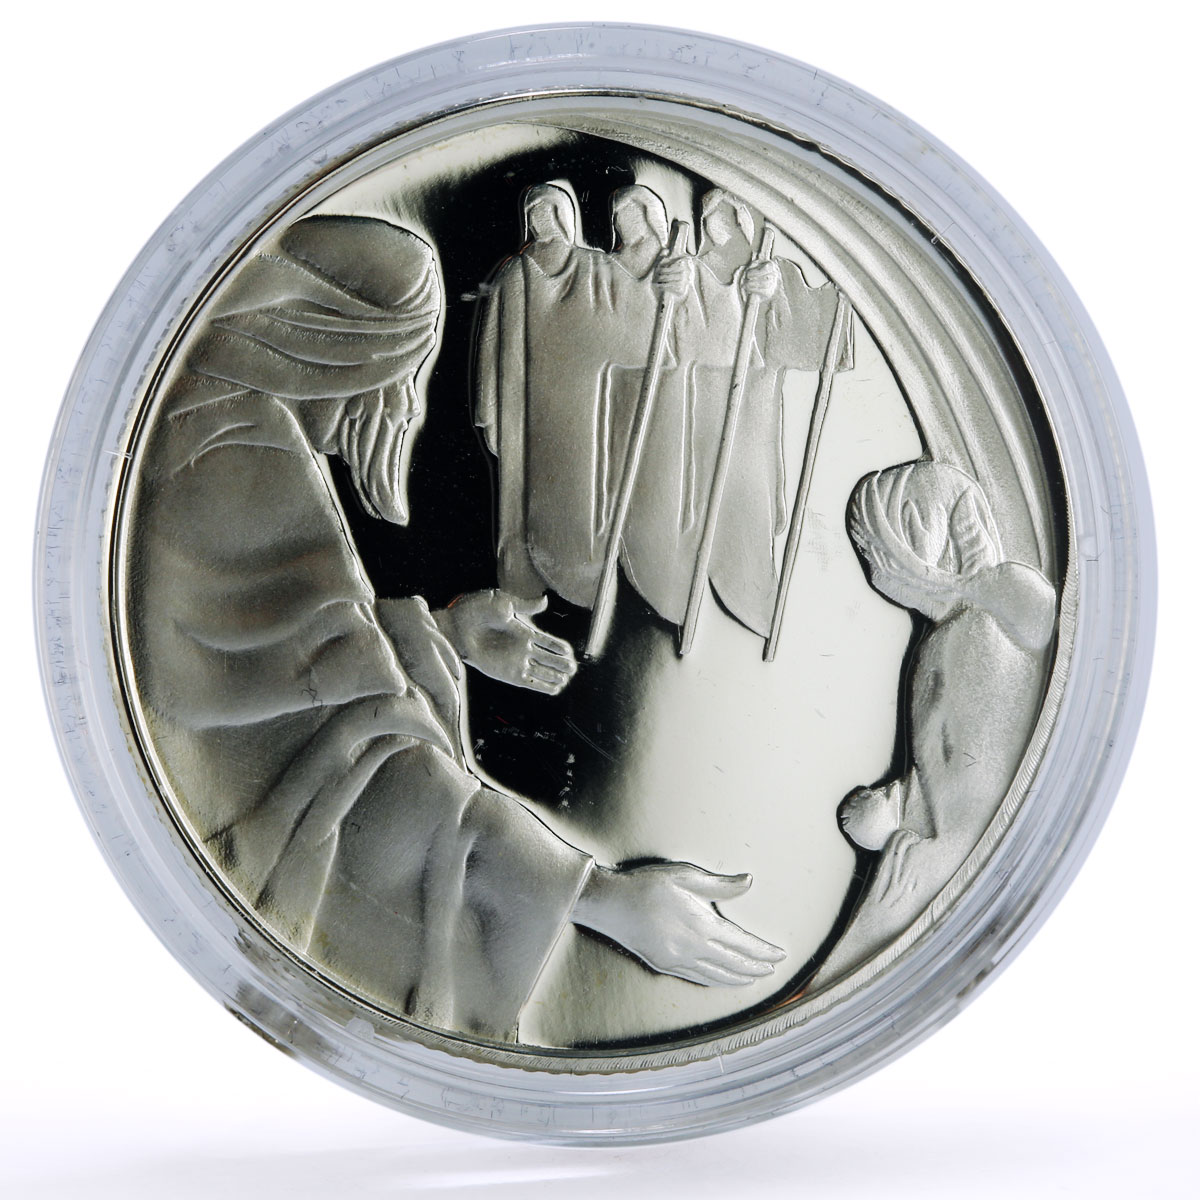 Israel 2 sheqalim Biblical Art Abraham and Three Angels proof silver coin 2006